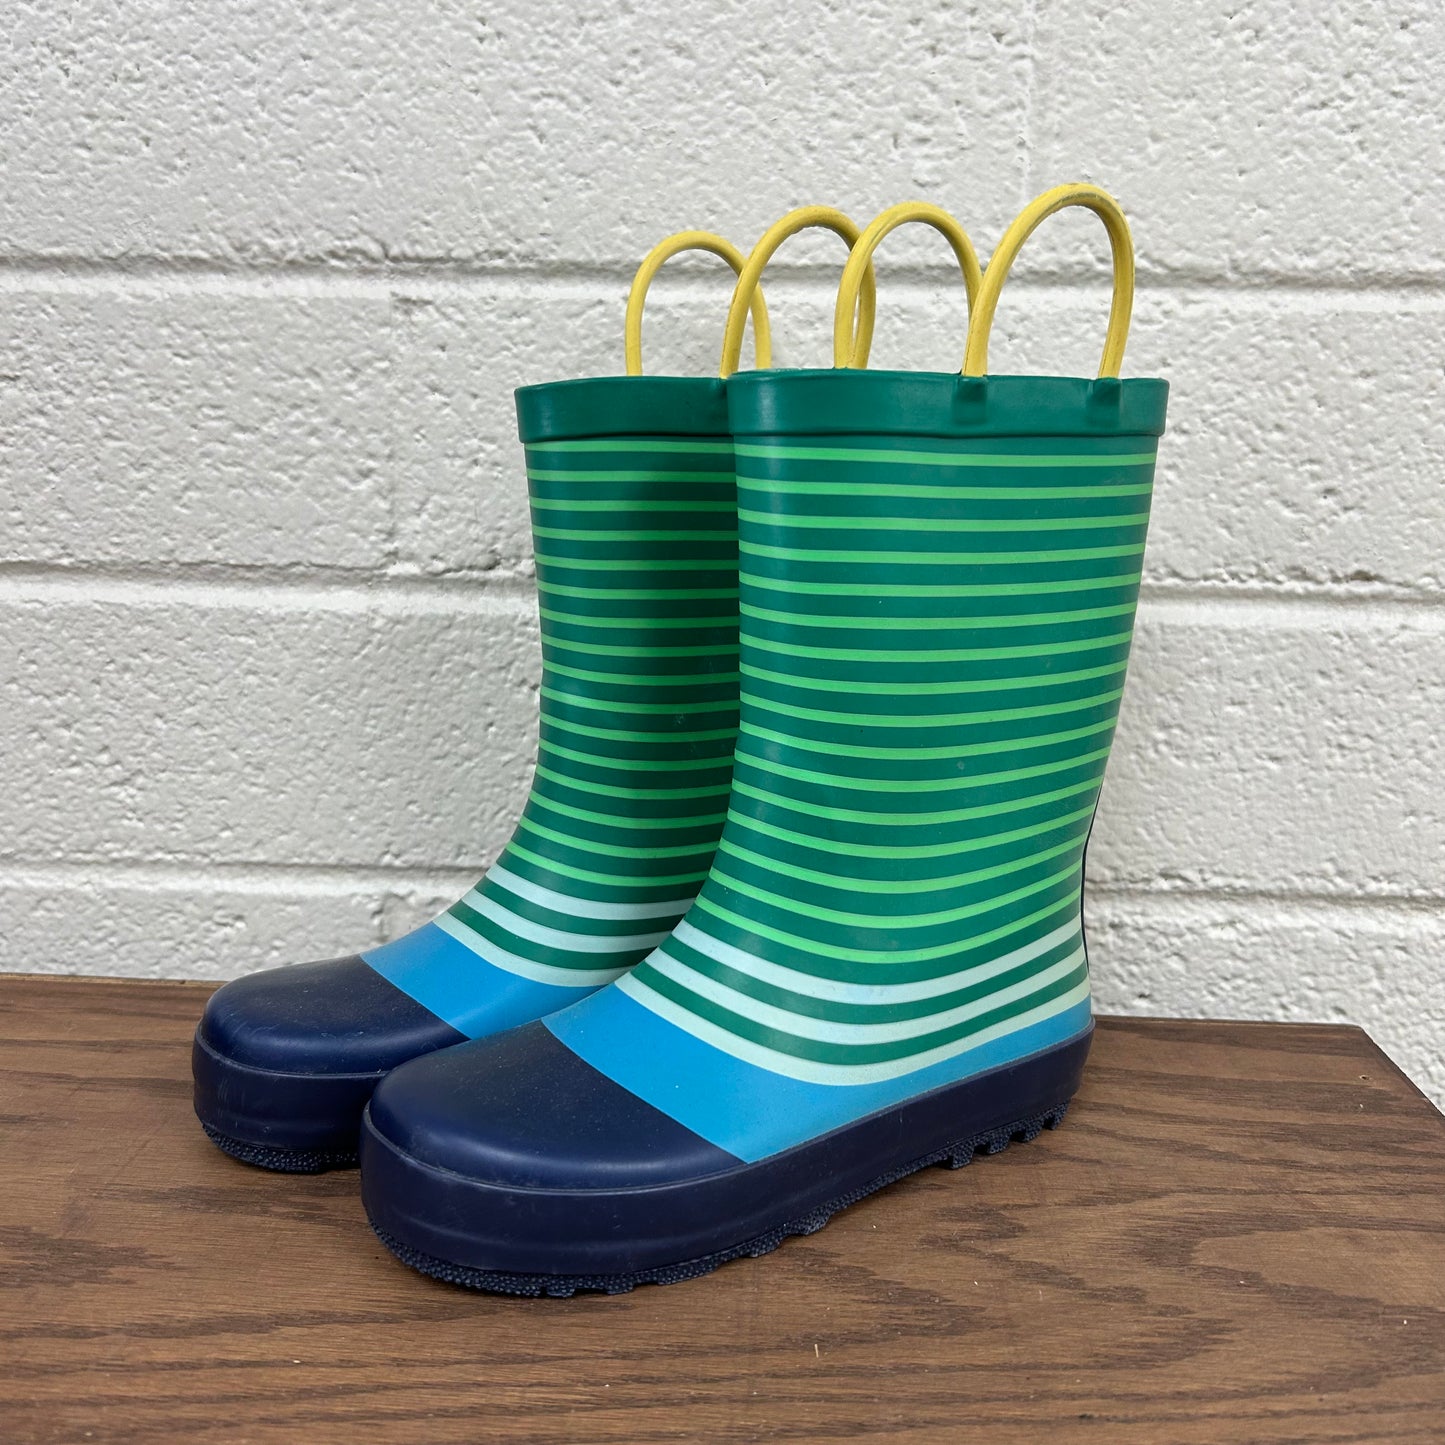 Blue & Green Striped Rain Boots